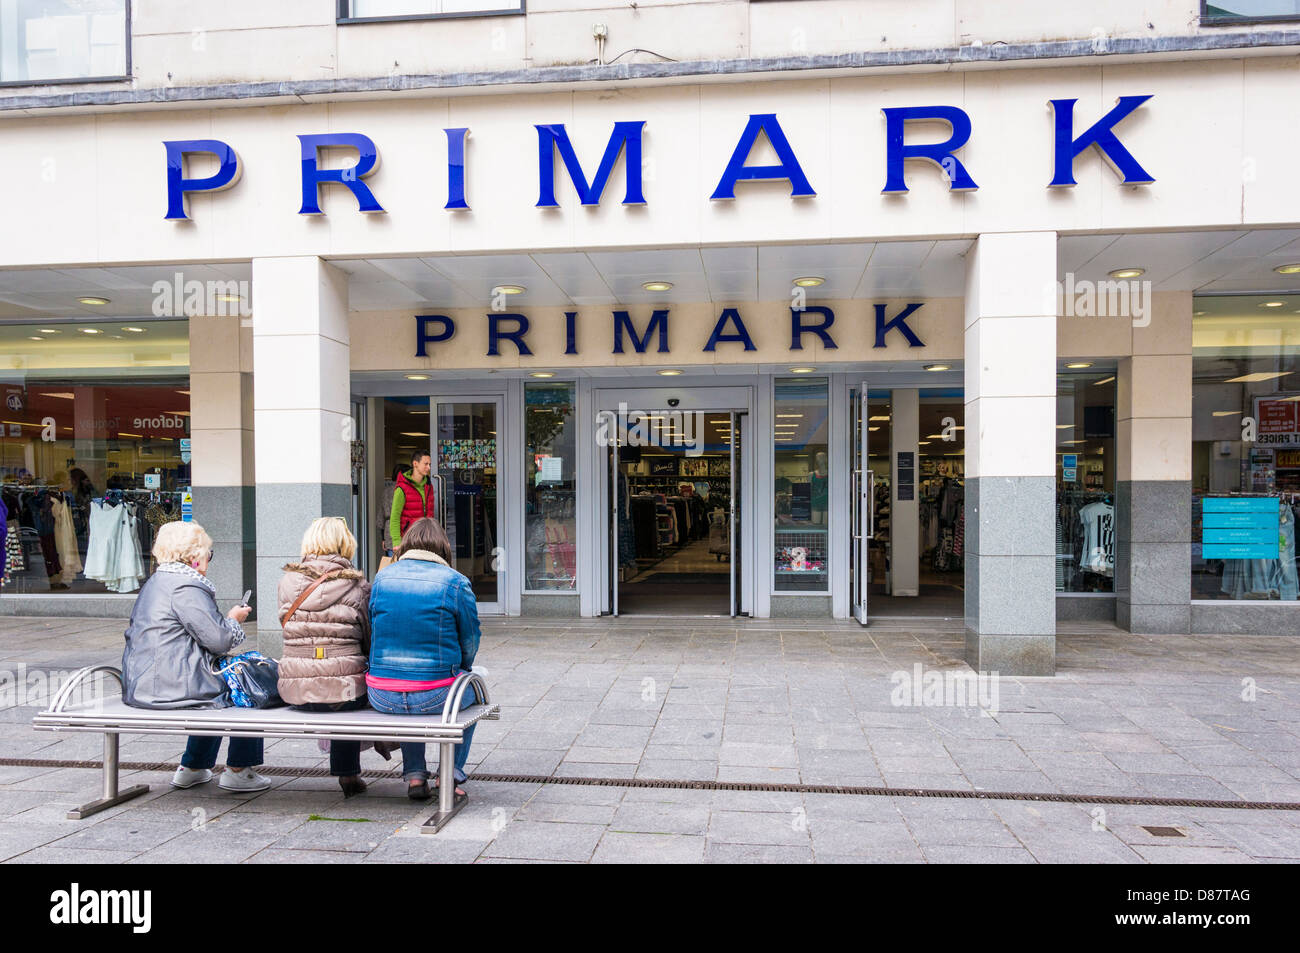 Primark store front entrance, England, UK Stock Photo